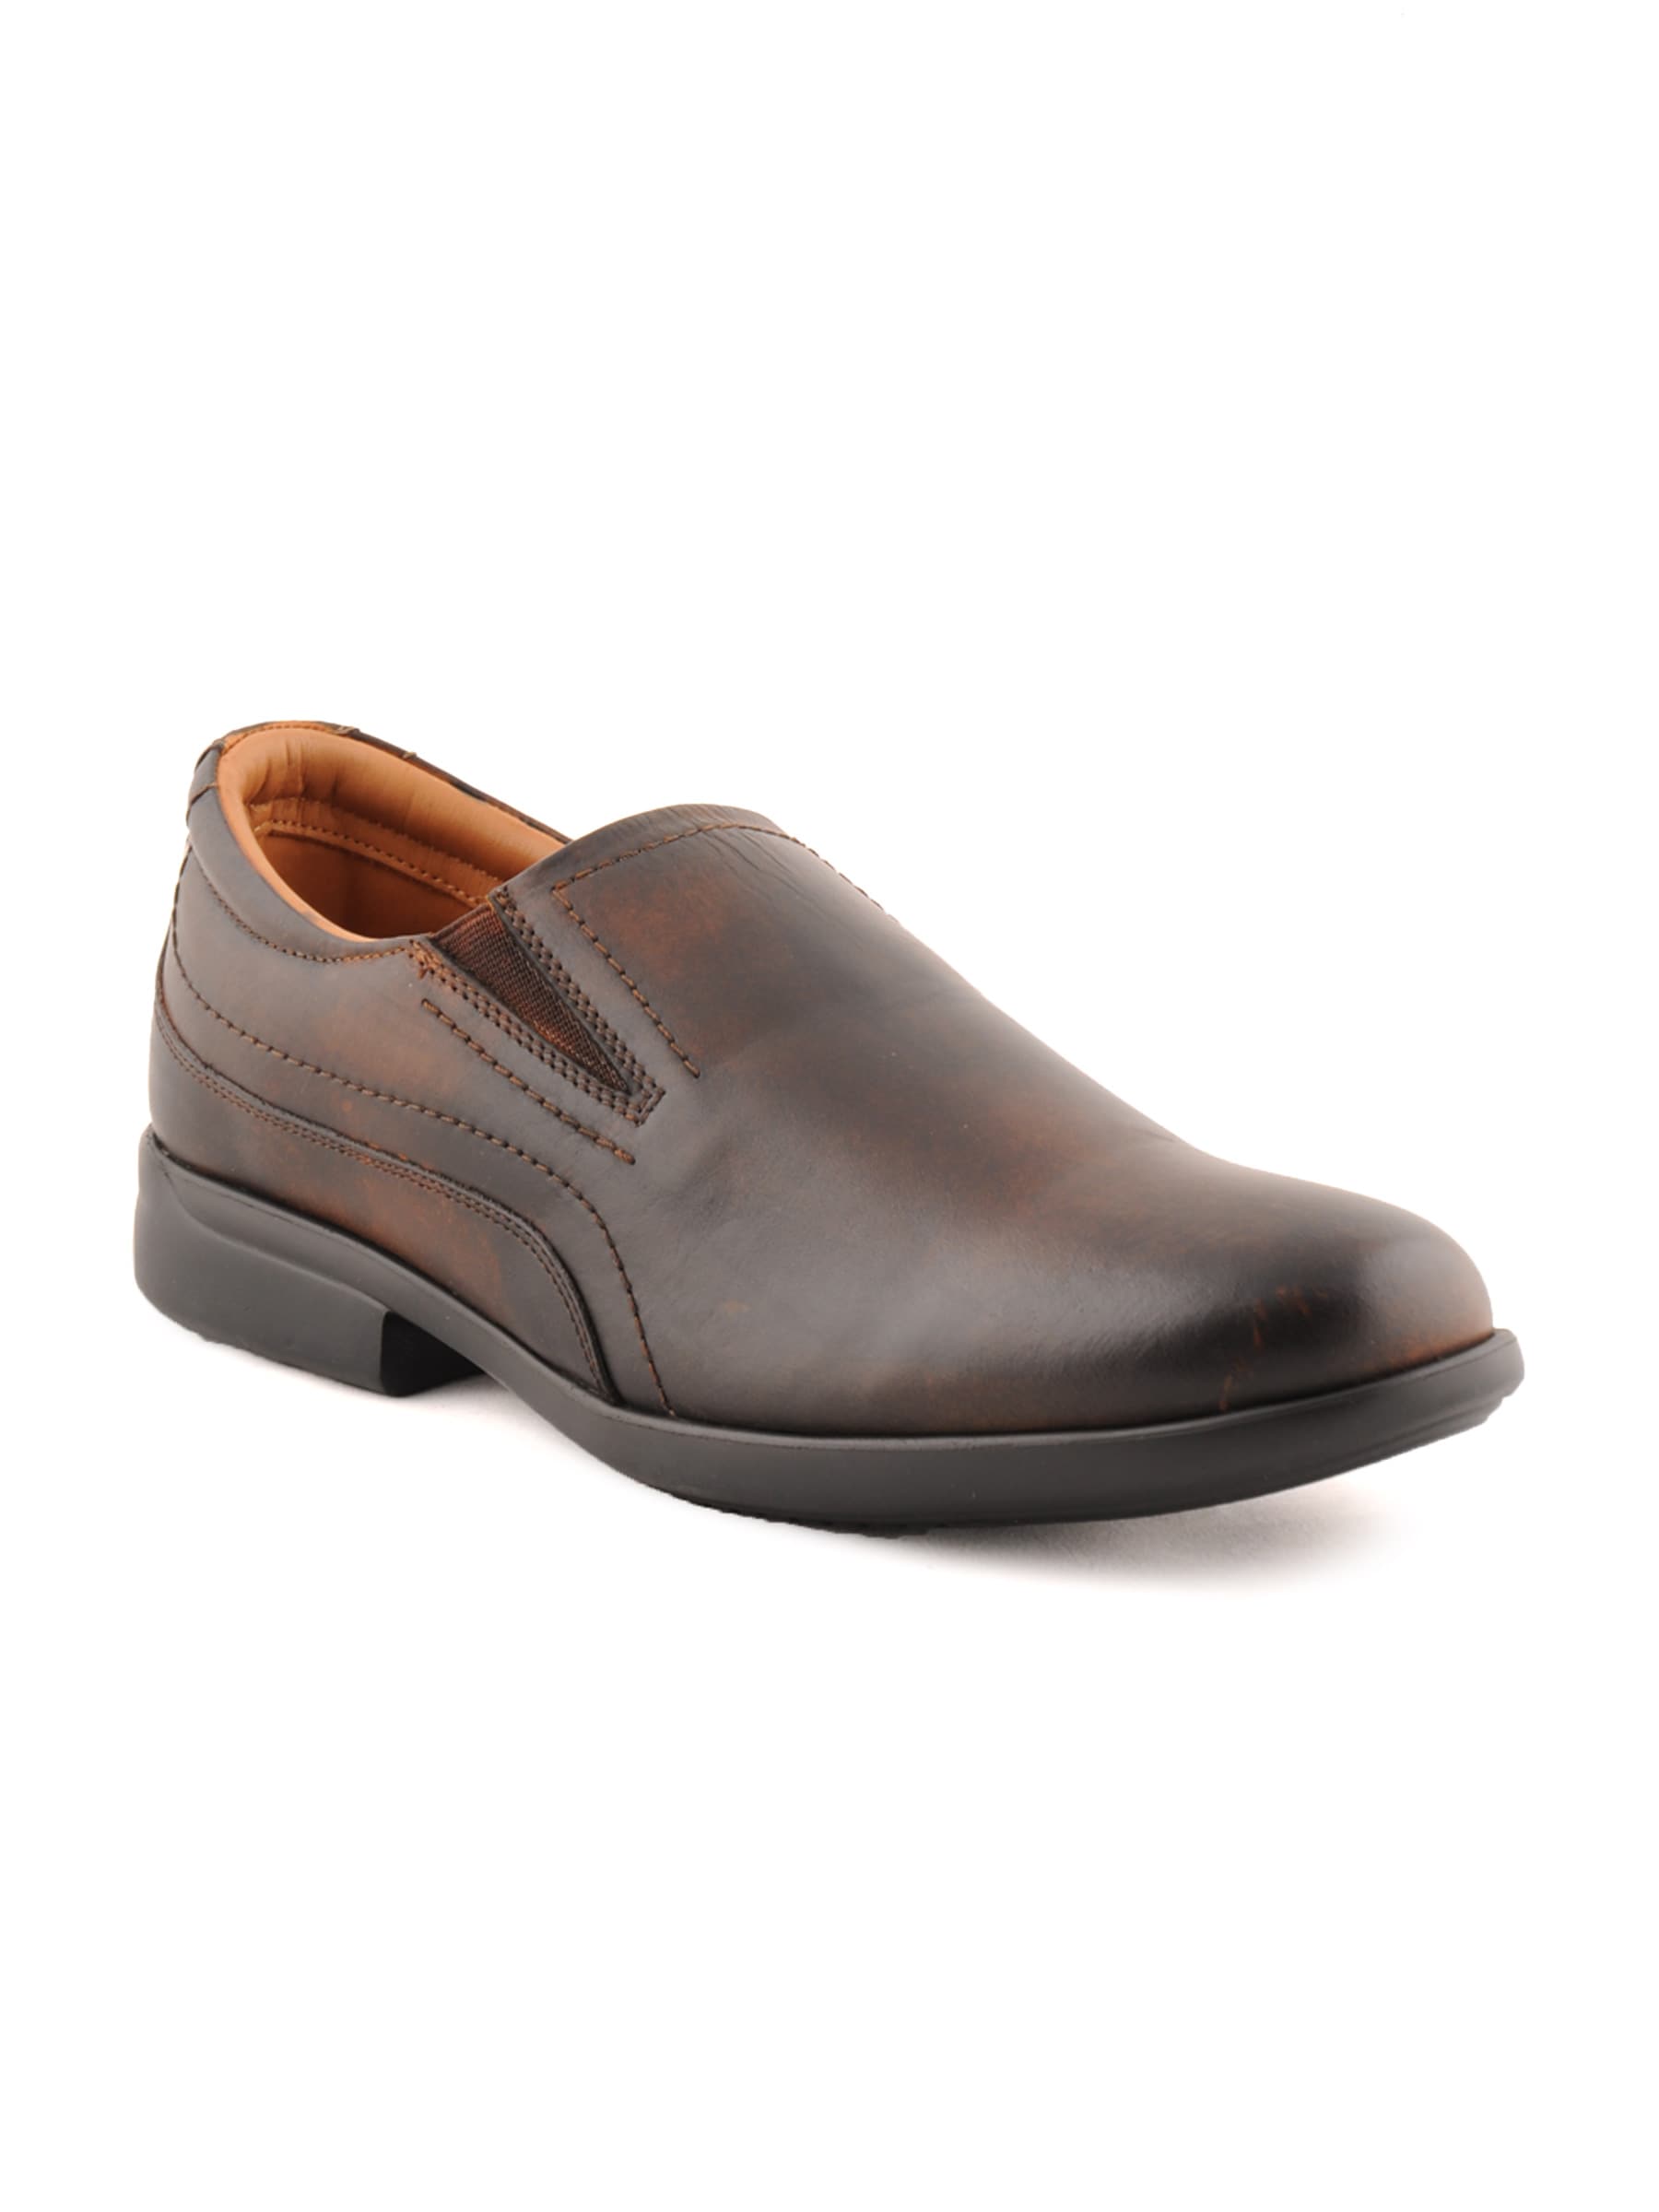 Franco Leone Men Formal Tan Formal Shoes